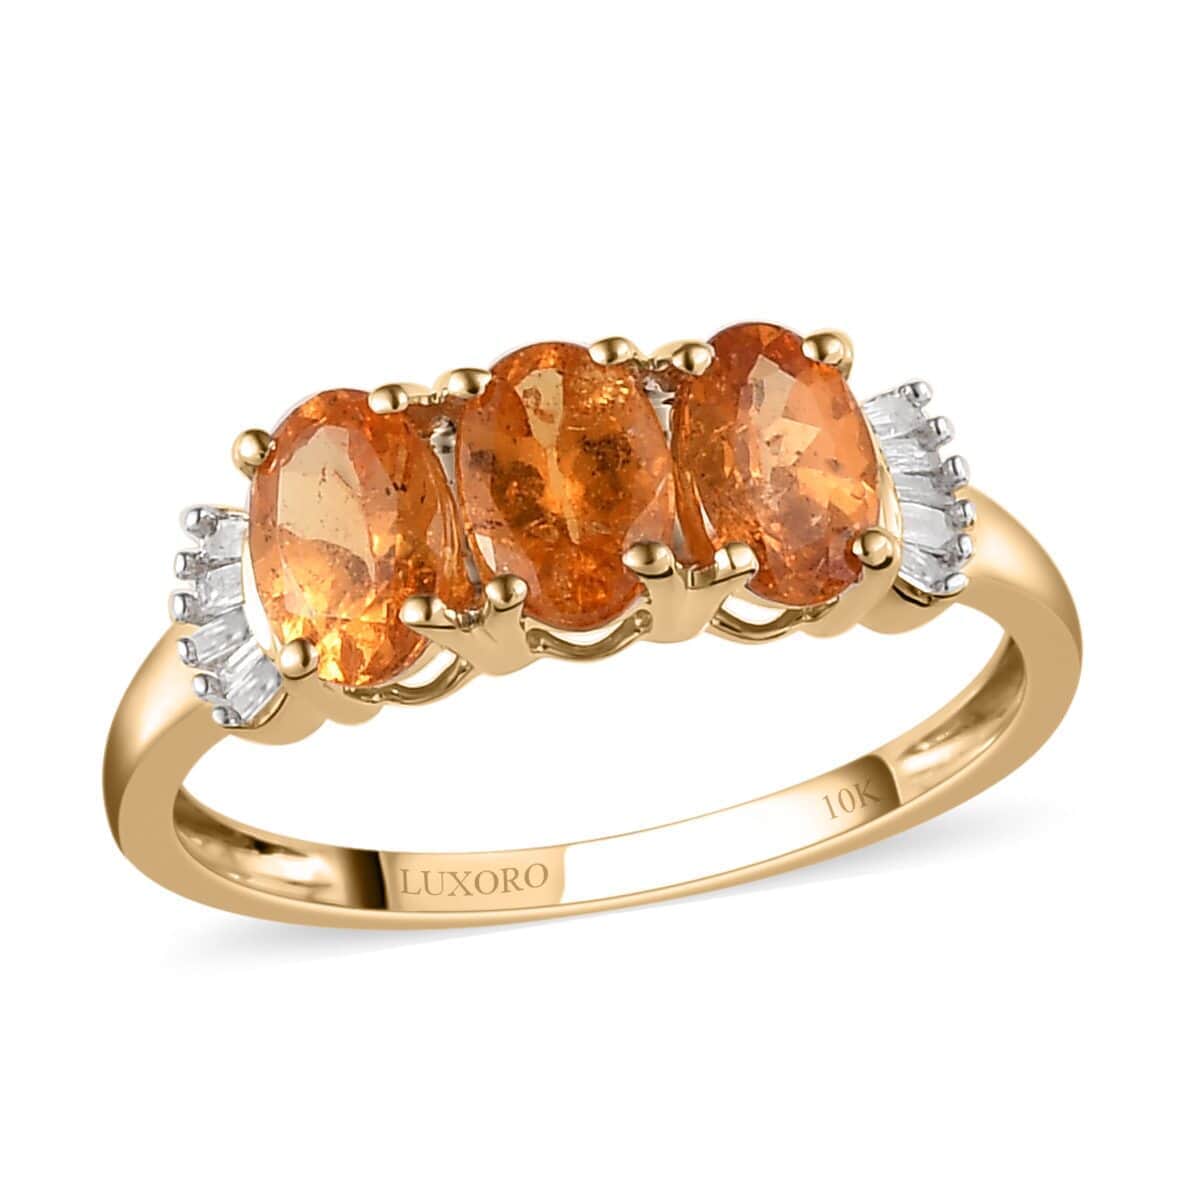 Luxoro 10K Yellow Gold Premium Viceroy Spessartine Garnet and Diamond 3 Stone Ring (Size 9.0) 1.90 ctw image number 0